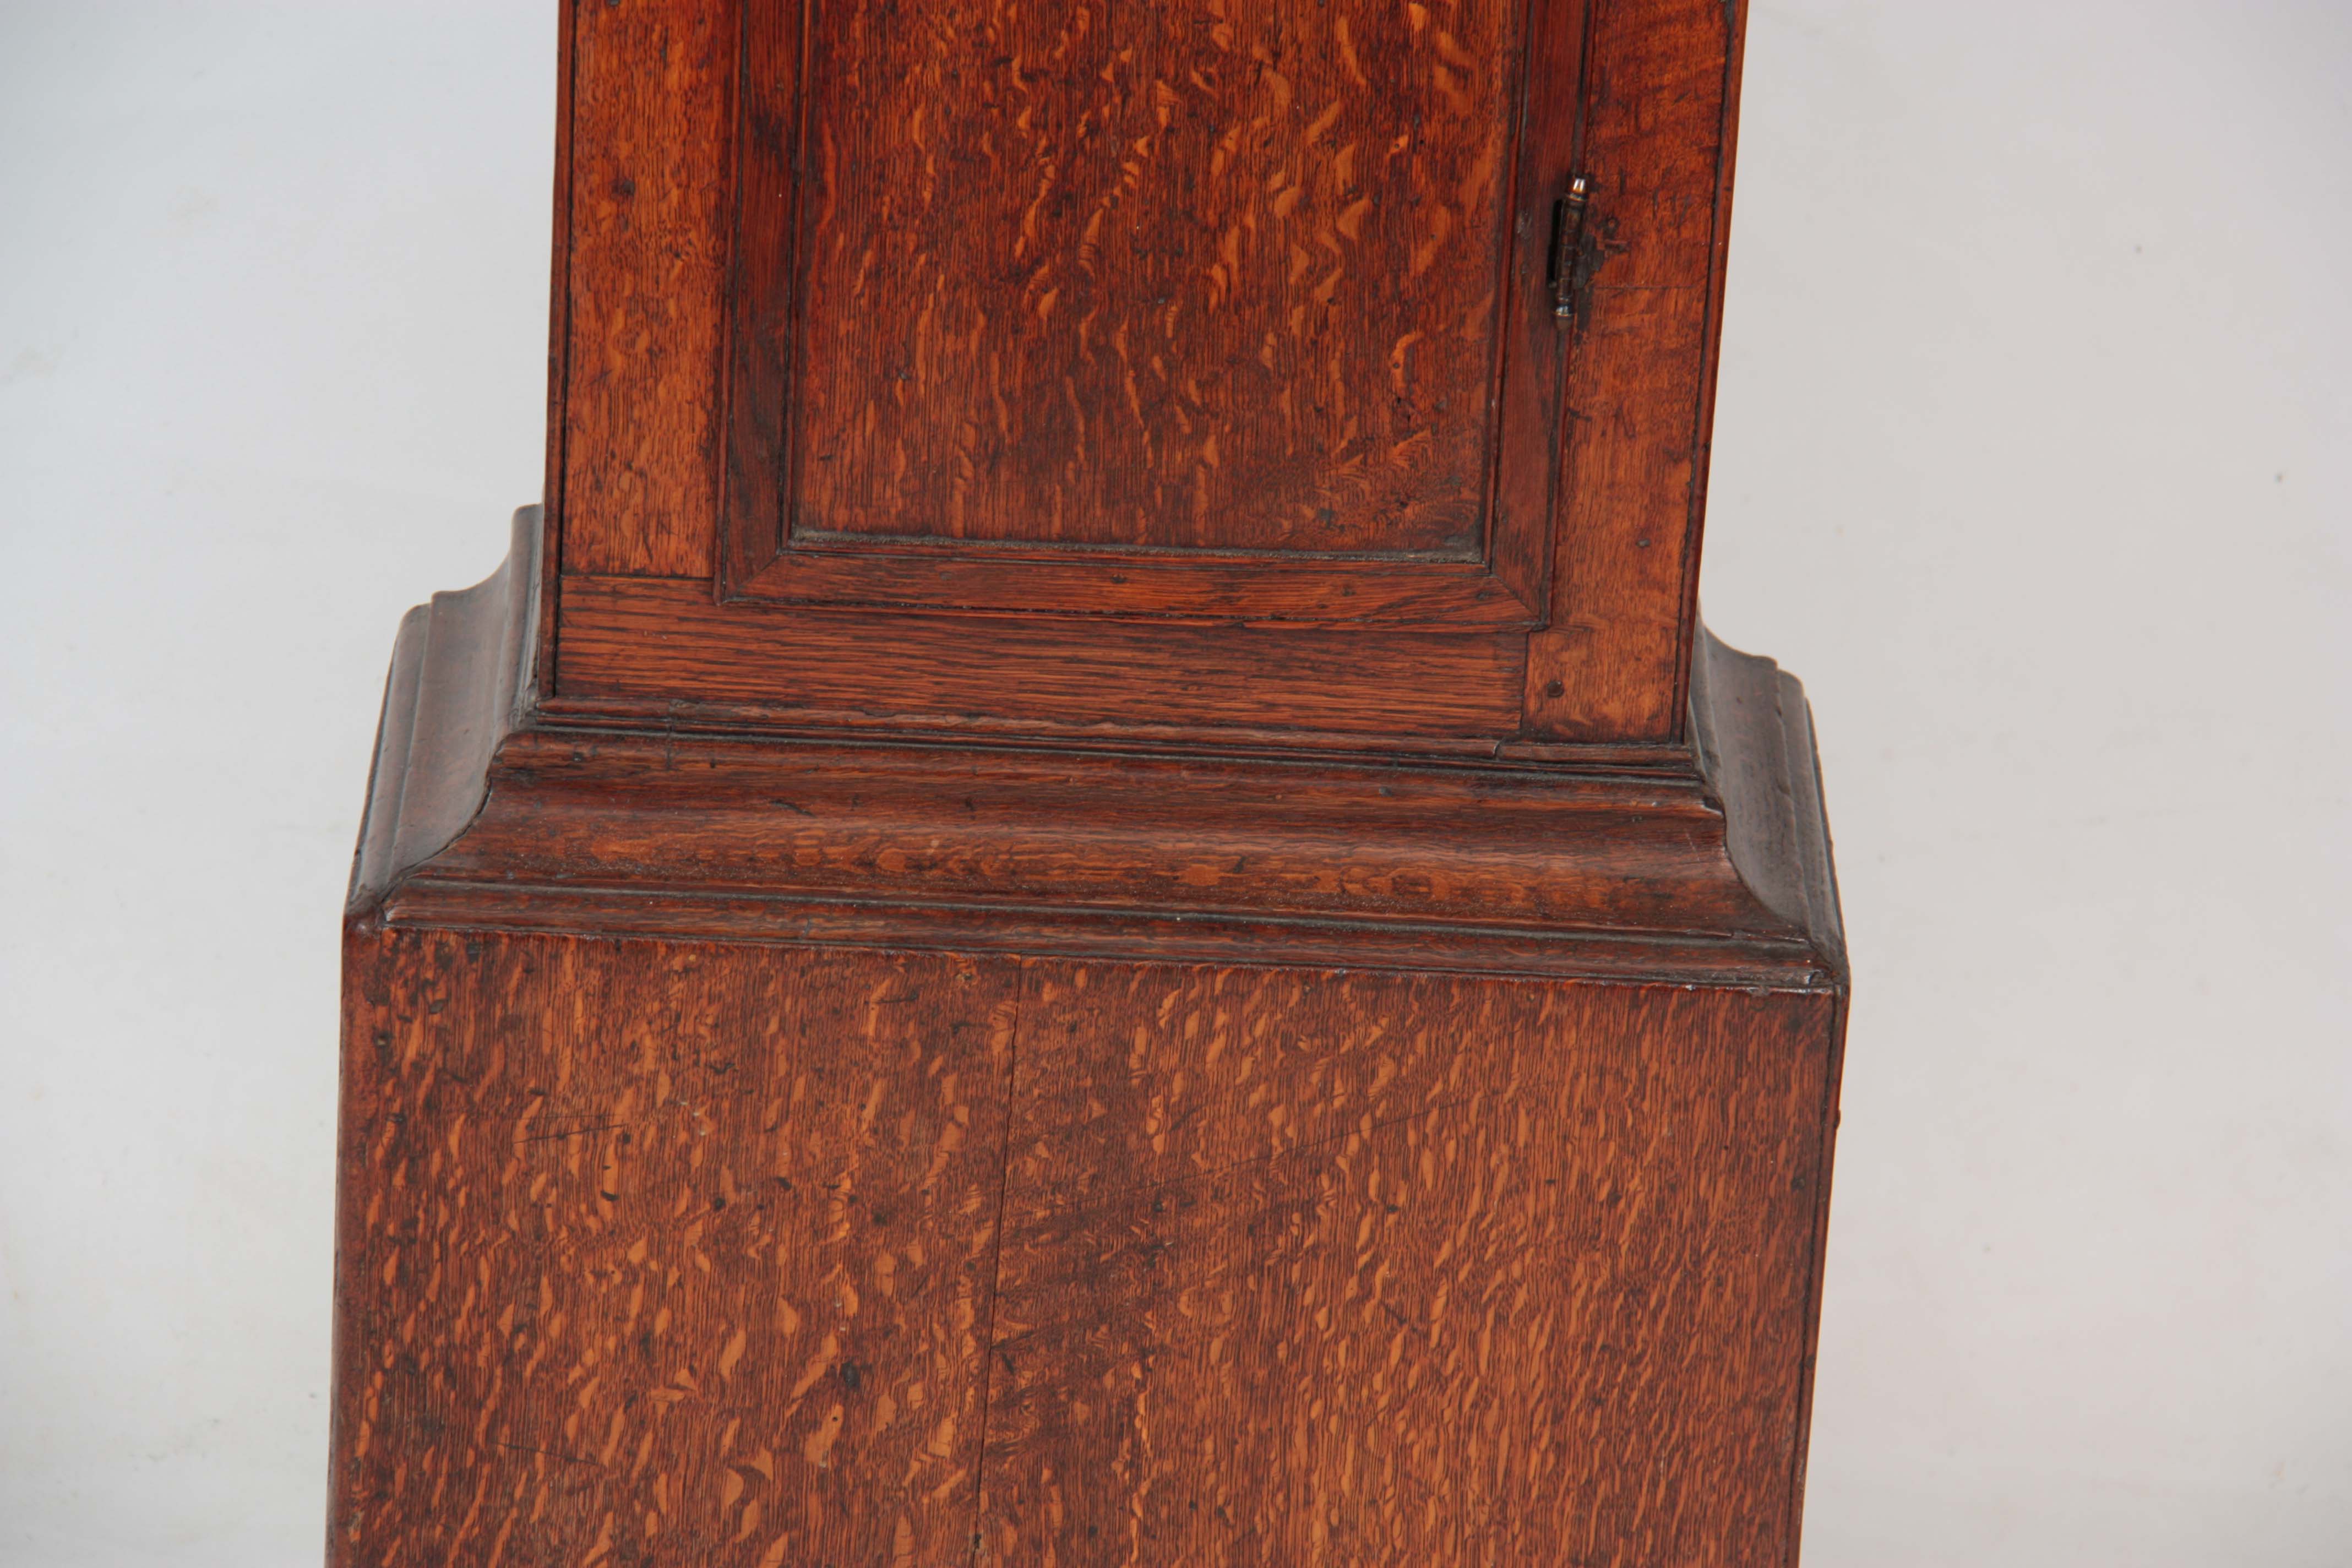 JOHN WYLDE, NOTTINGHAM. A MID 18th CENTURY AUTOMATION LONGCASE CLOCK the oak case having a break - Image 3 of 7